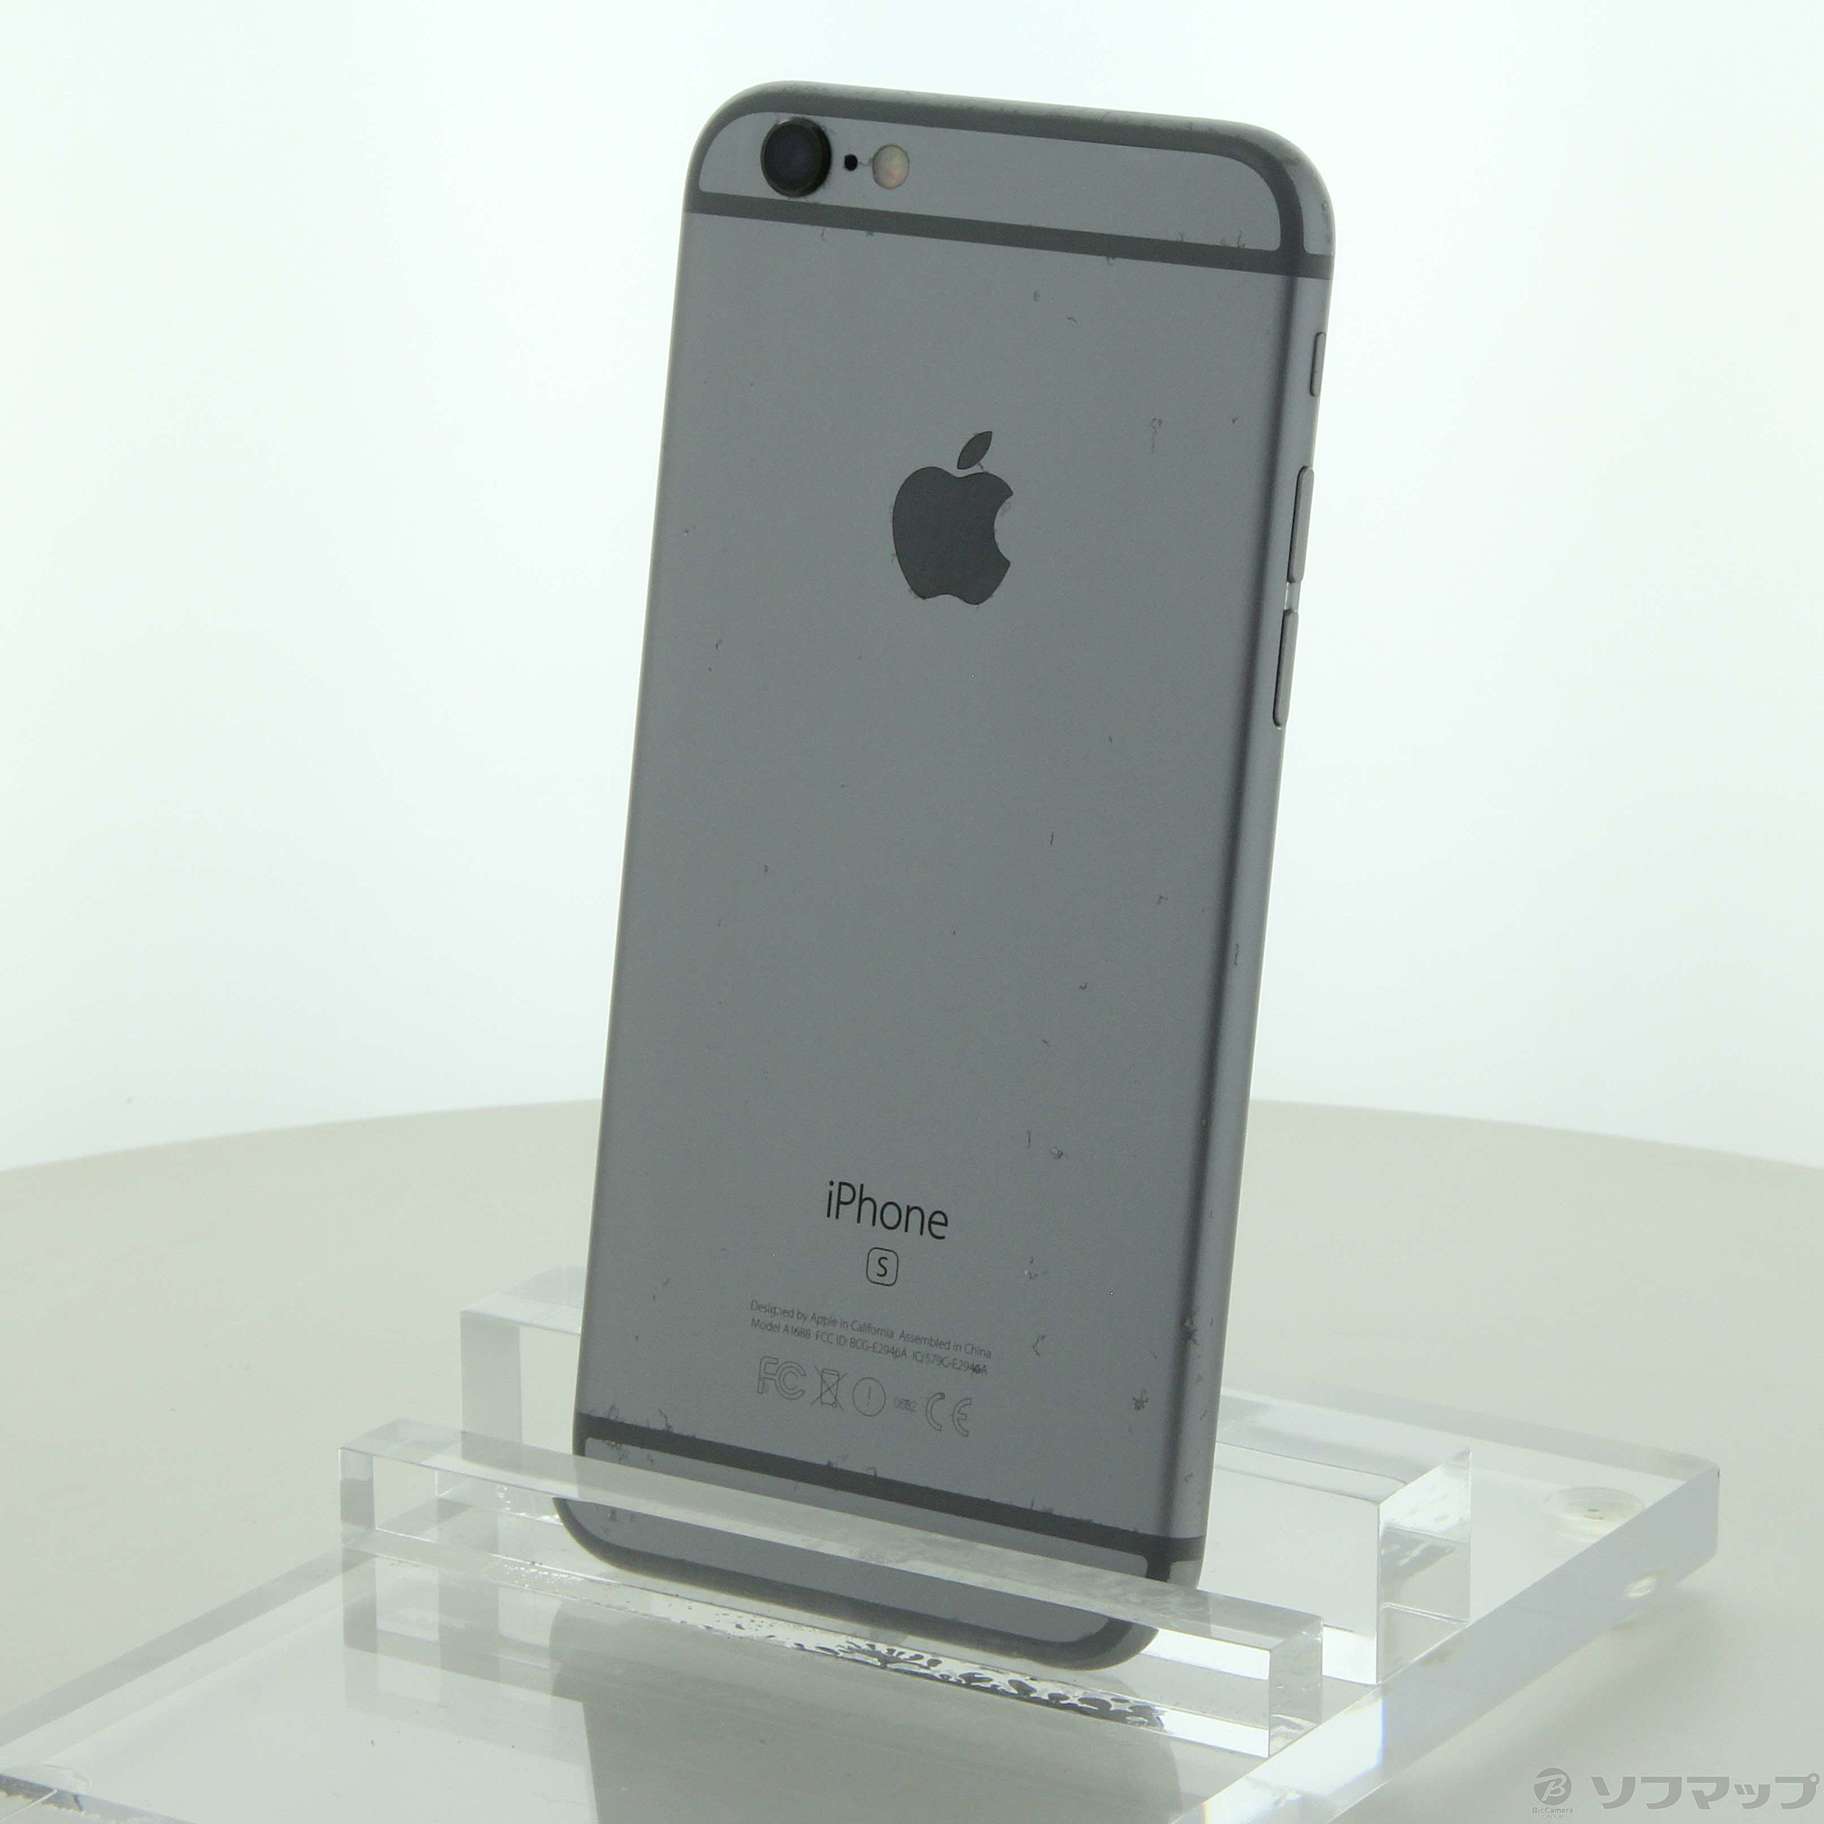 iPhone6s SIMフリー スペースグレイ 16gb - スマートフォン本体